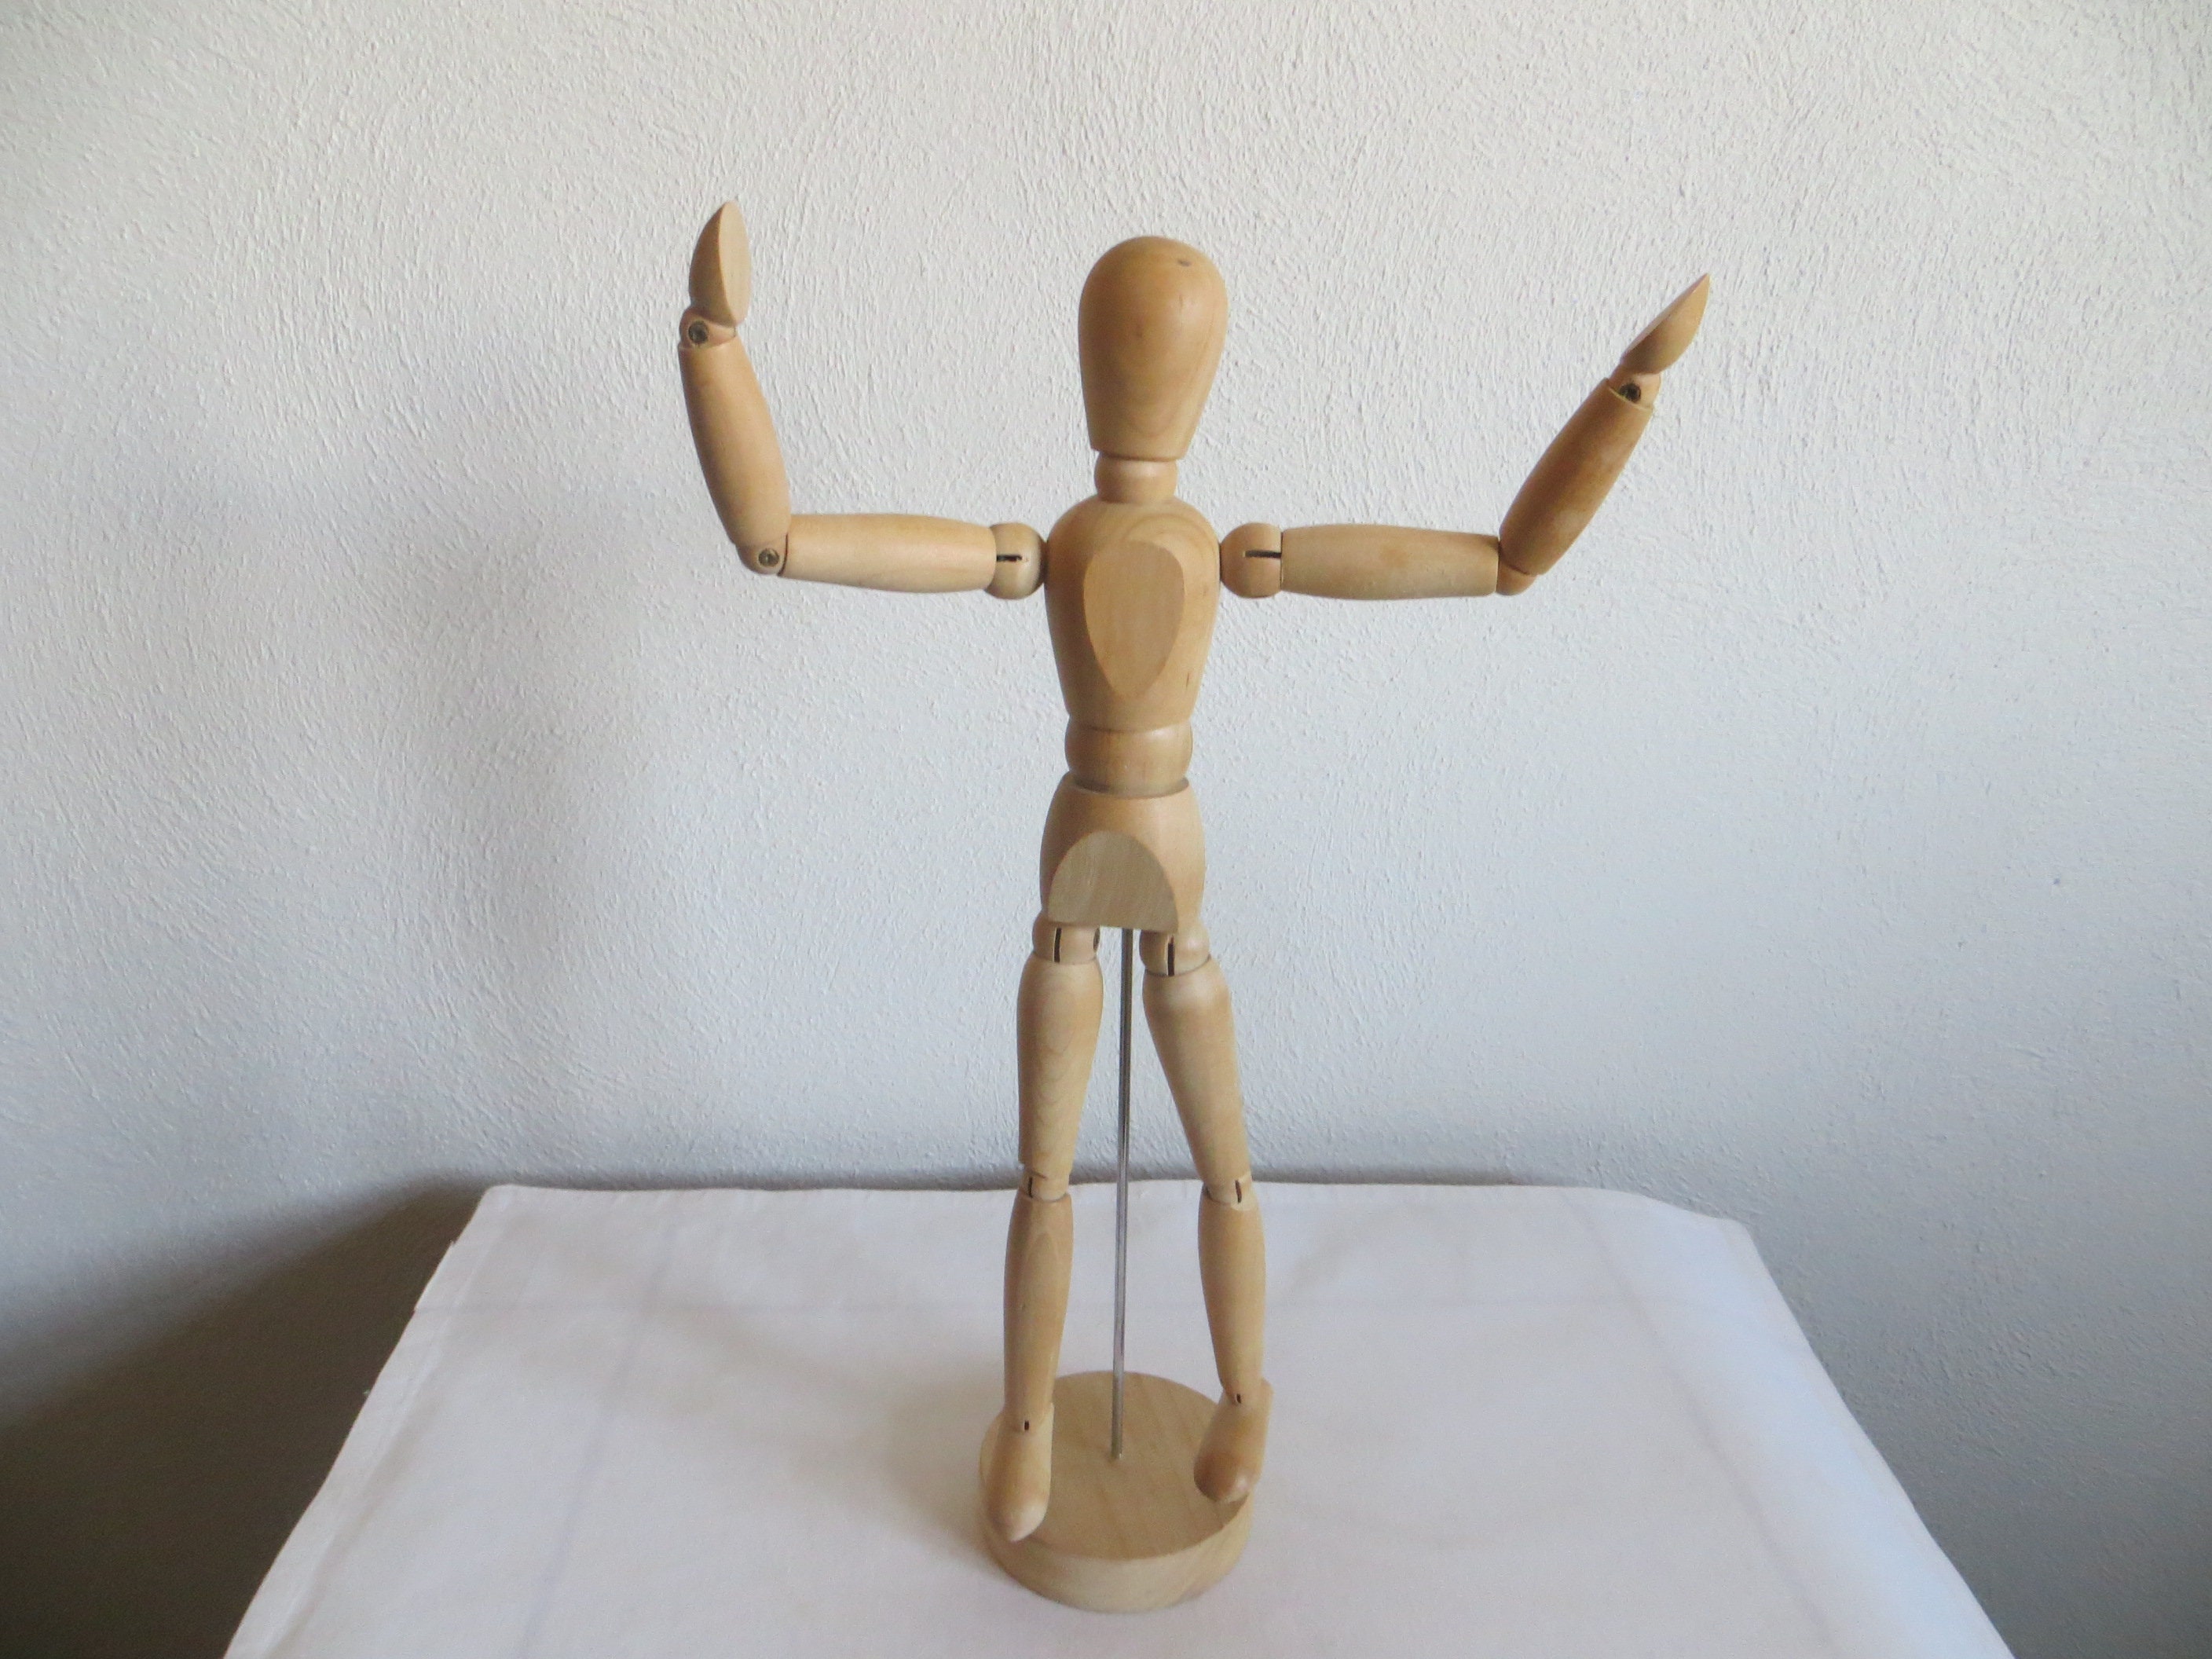 Articulated Wooden Mannequin Figure, Adjustable Limbs, Sketching